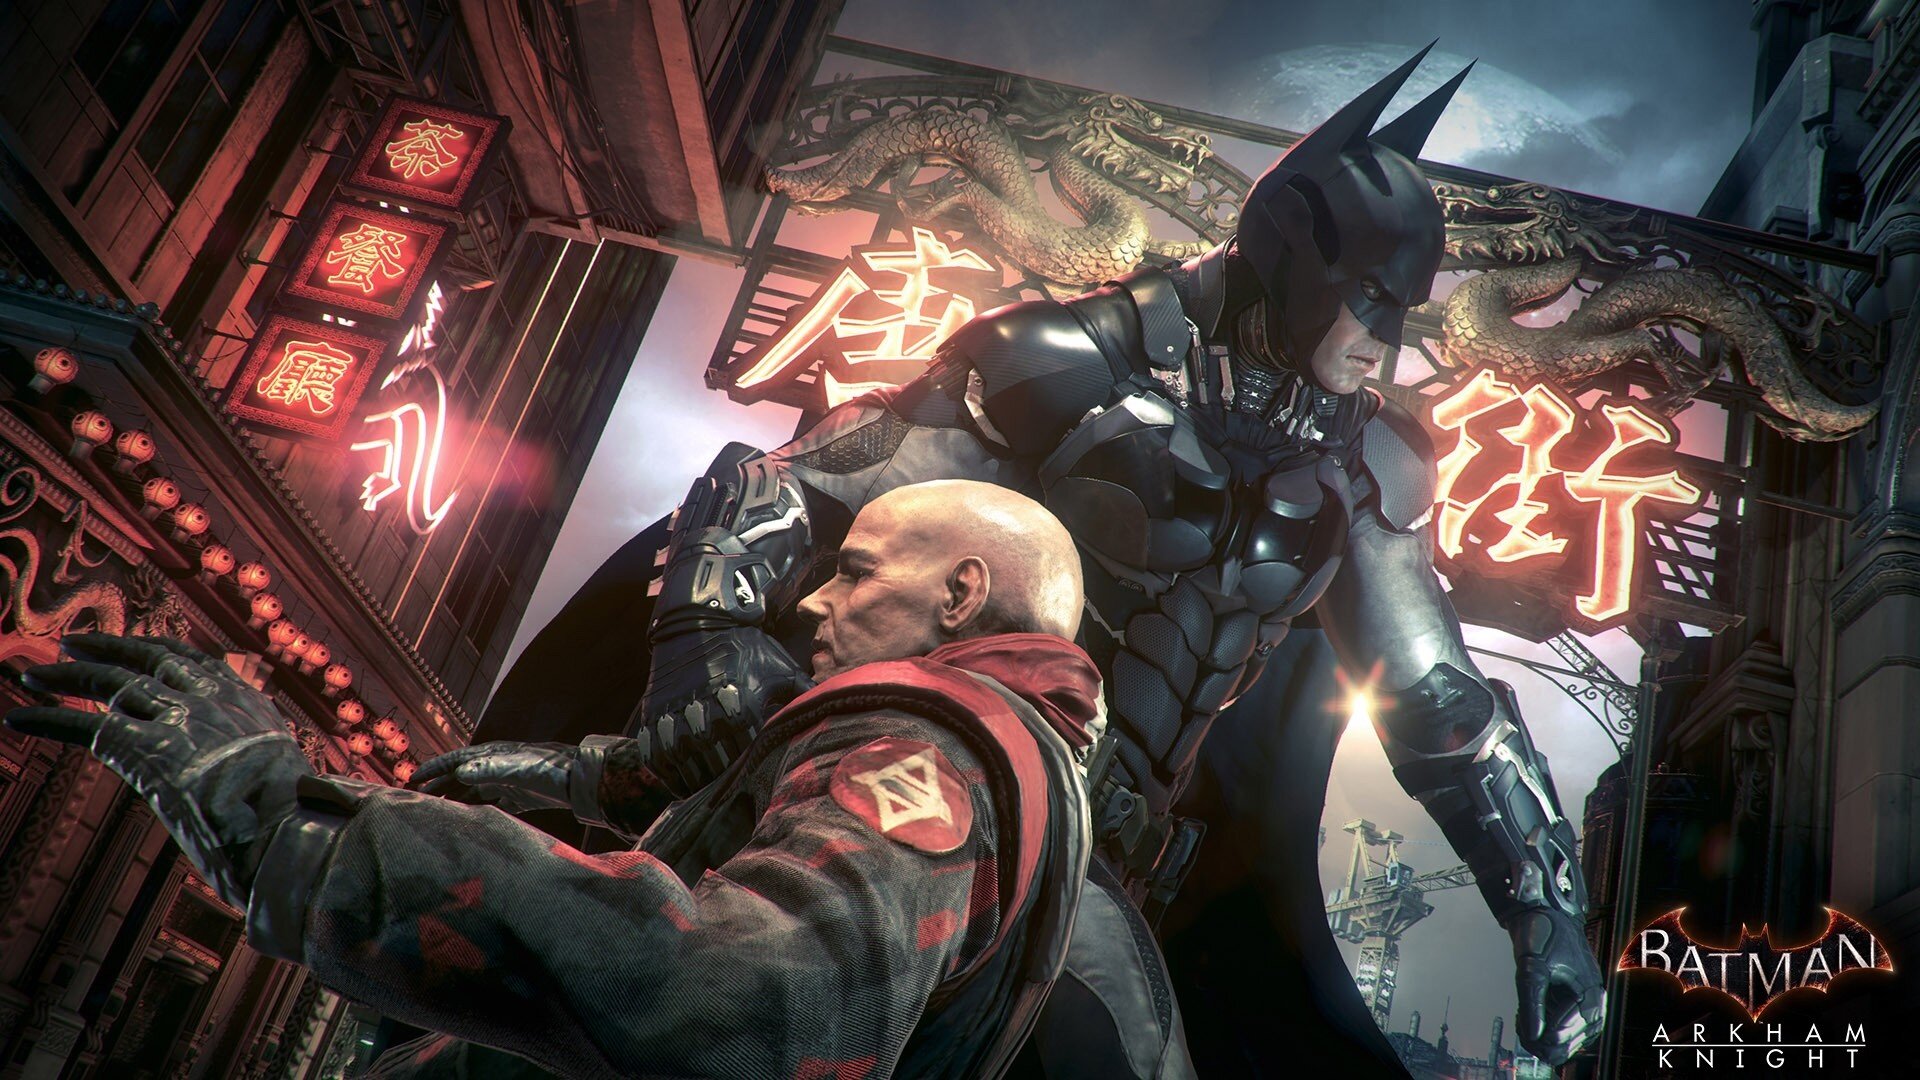  Batman: Arkham Knight (PS4) : Video Games